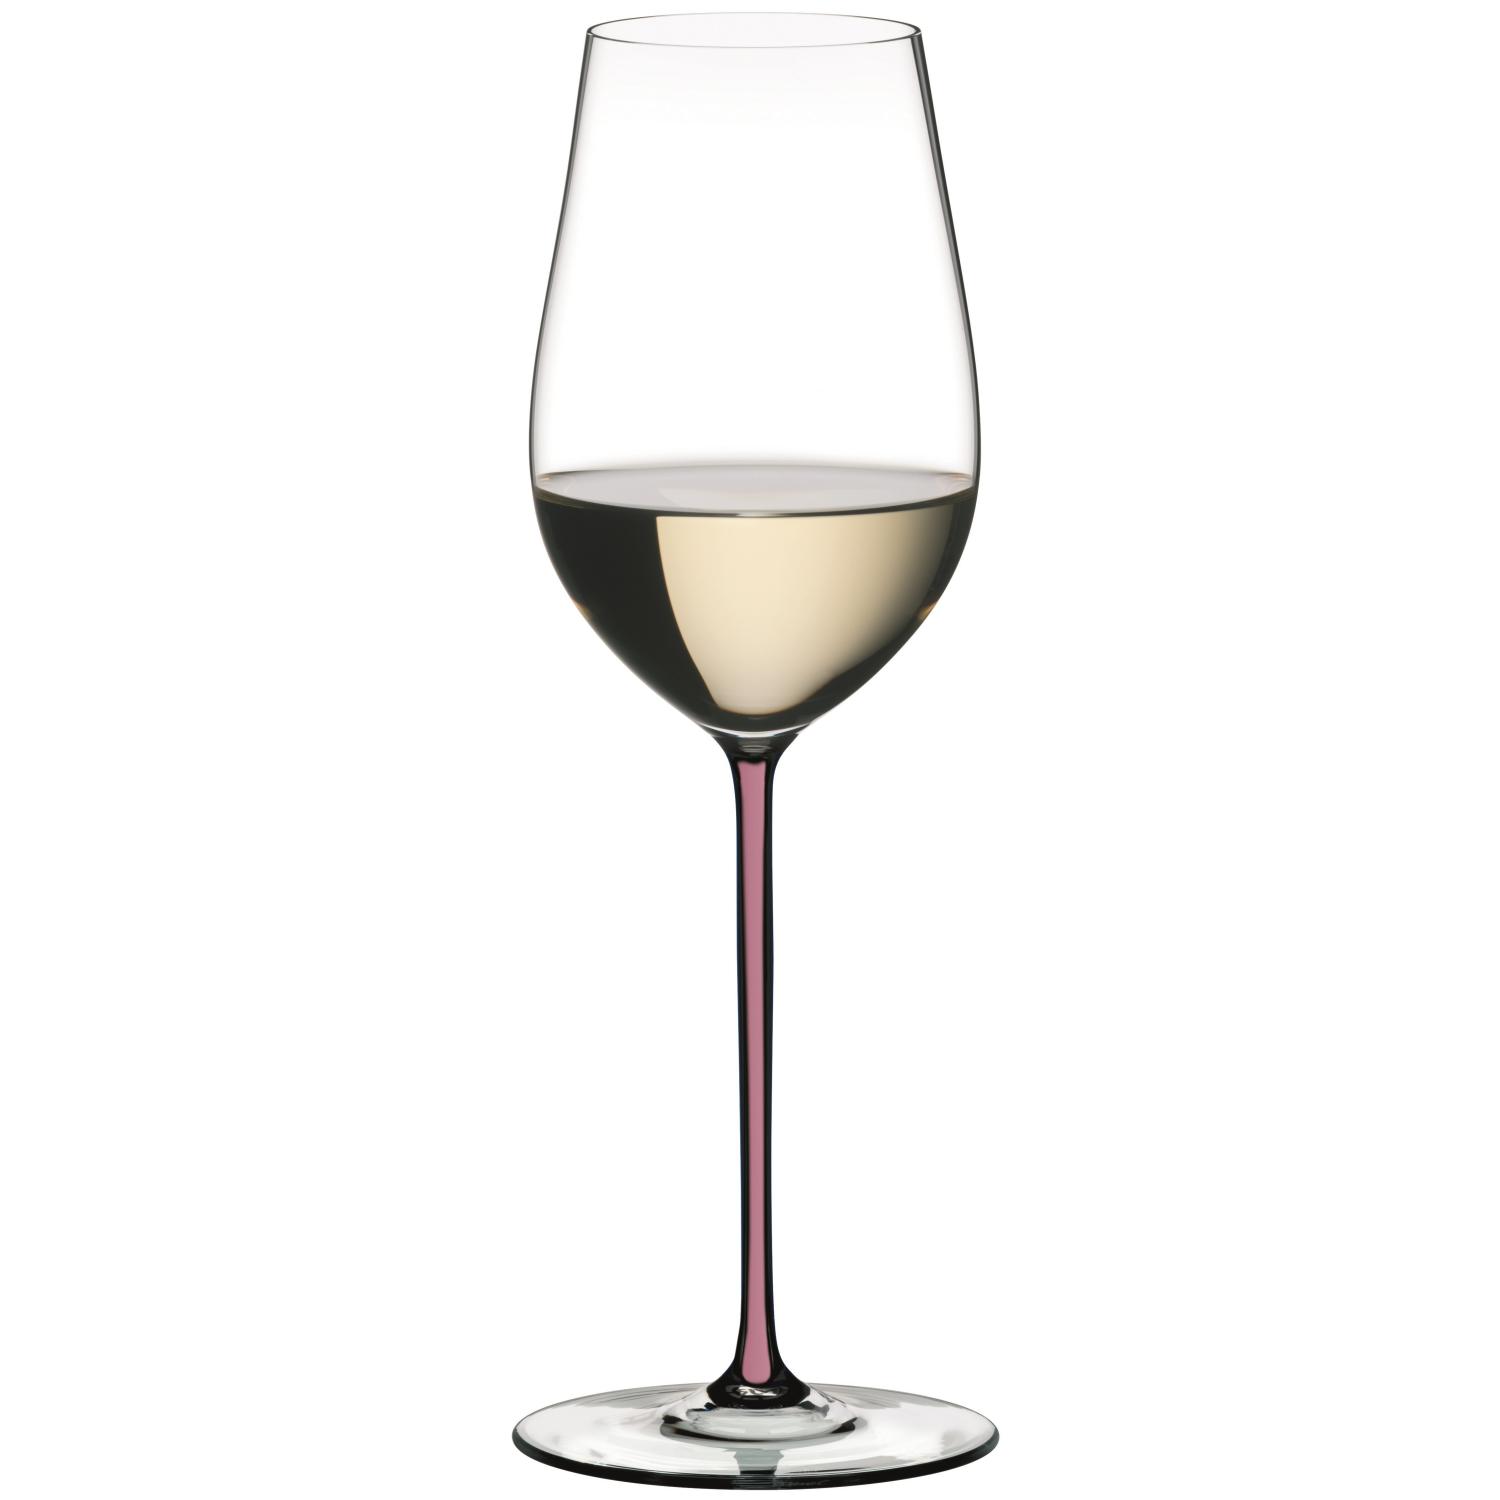 Бокал для белого вина RIEDEL Fatto A Mano Riesling/Zinfandel Mauve 395 мл (арт. 4900/15MA)